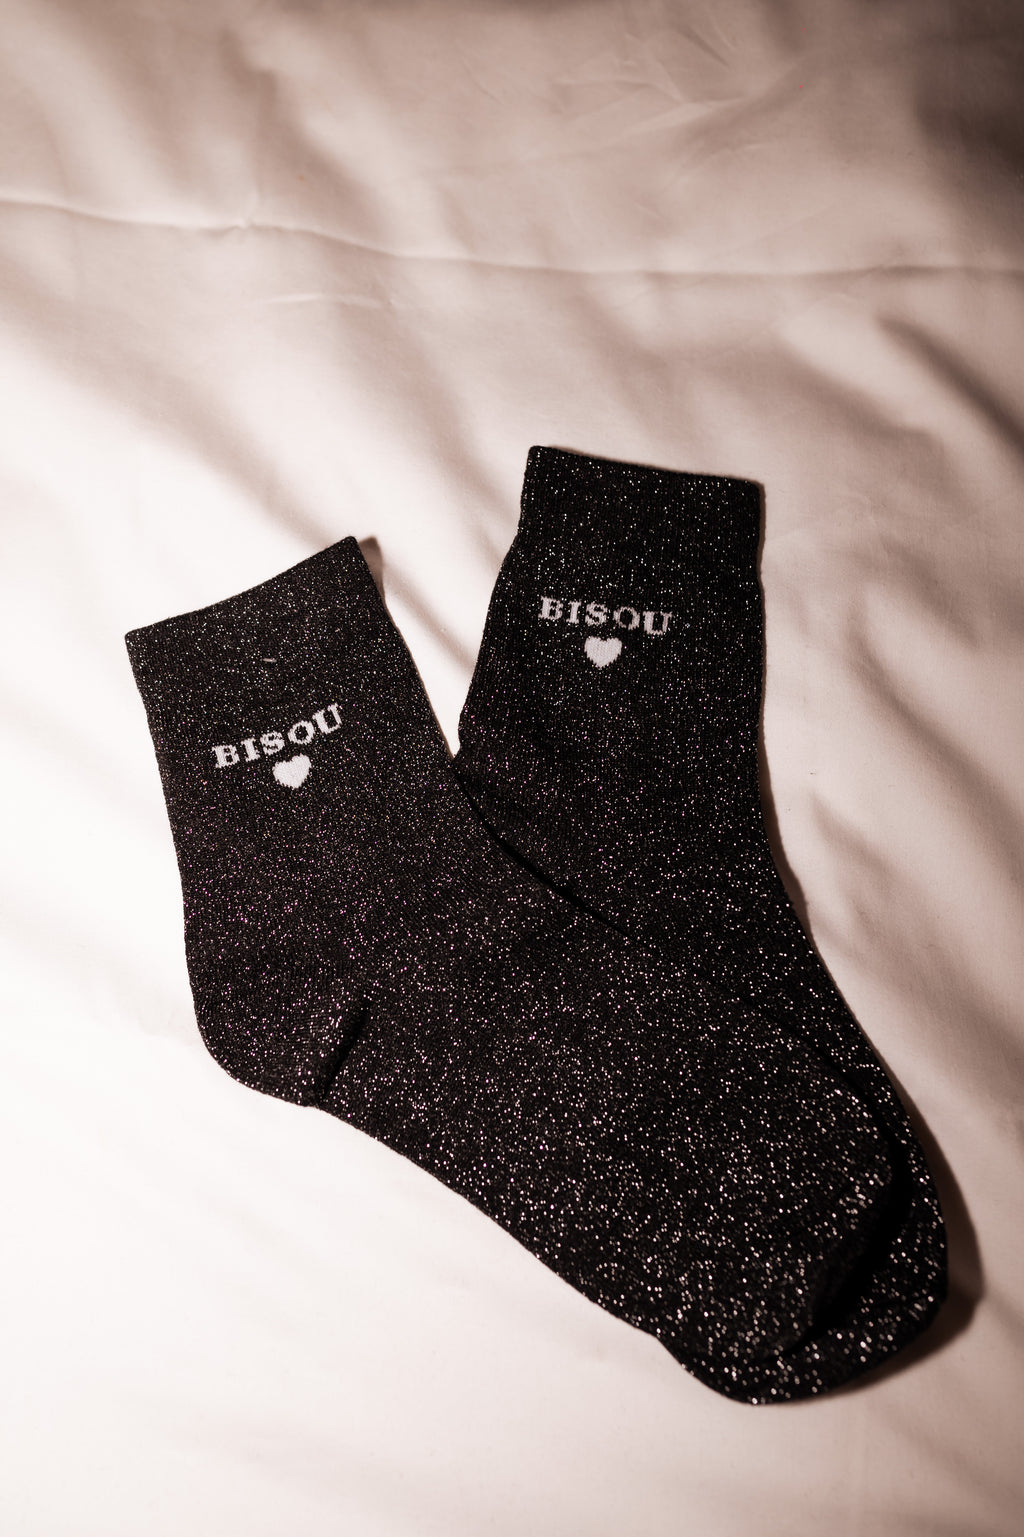 Bisou socks - bright black